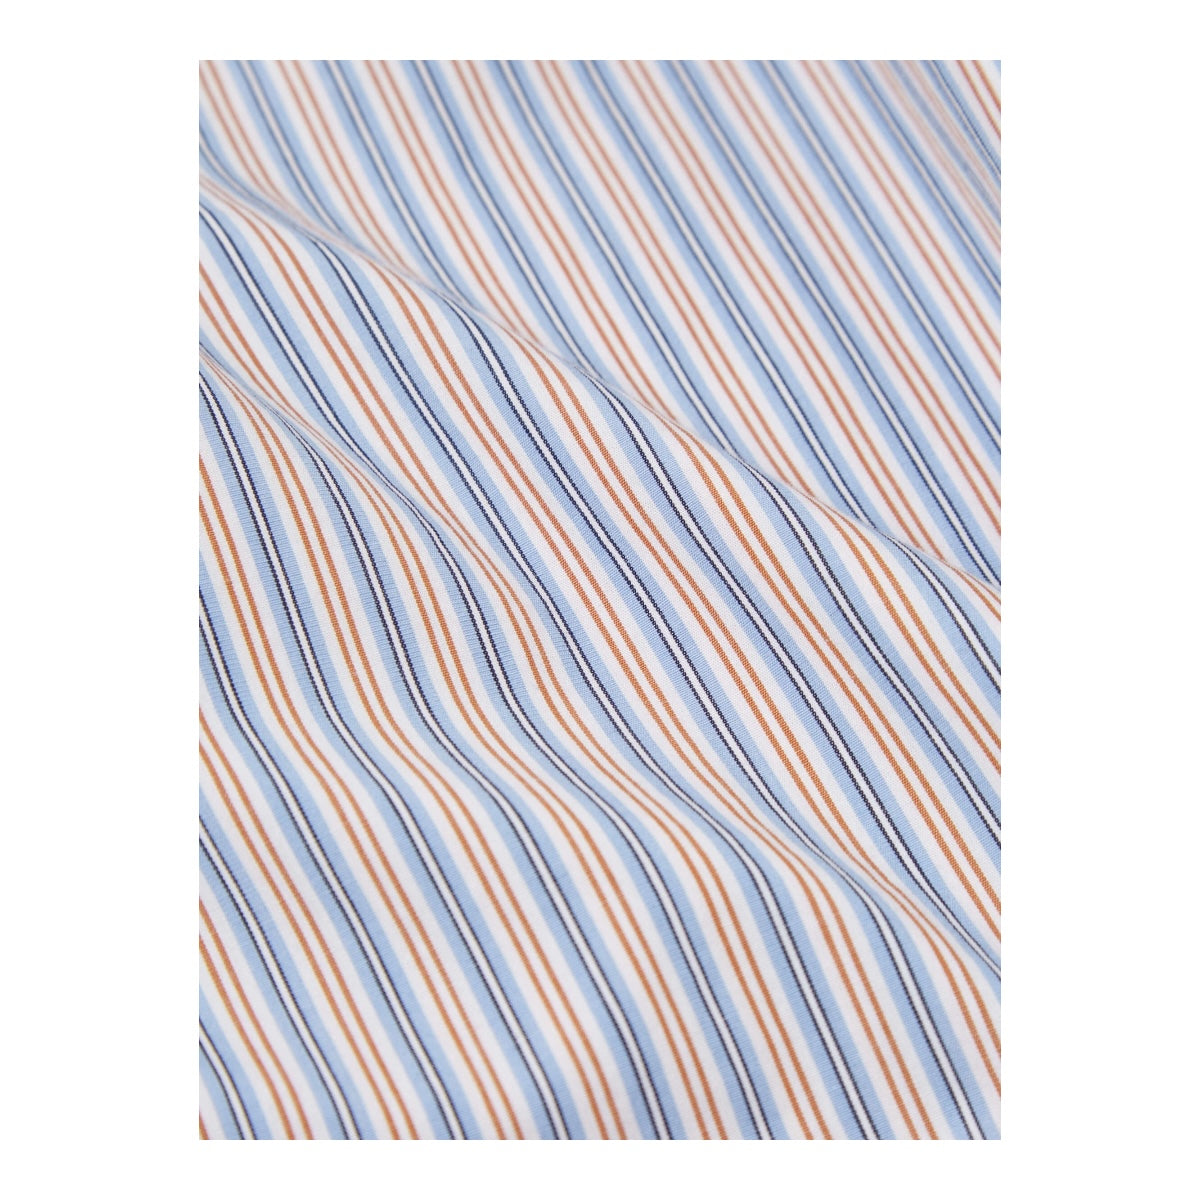 Universal Works Square Pocket Shirt 30677 busy stripe cotton blue/orange stripe